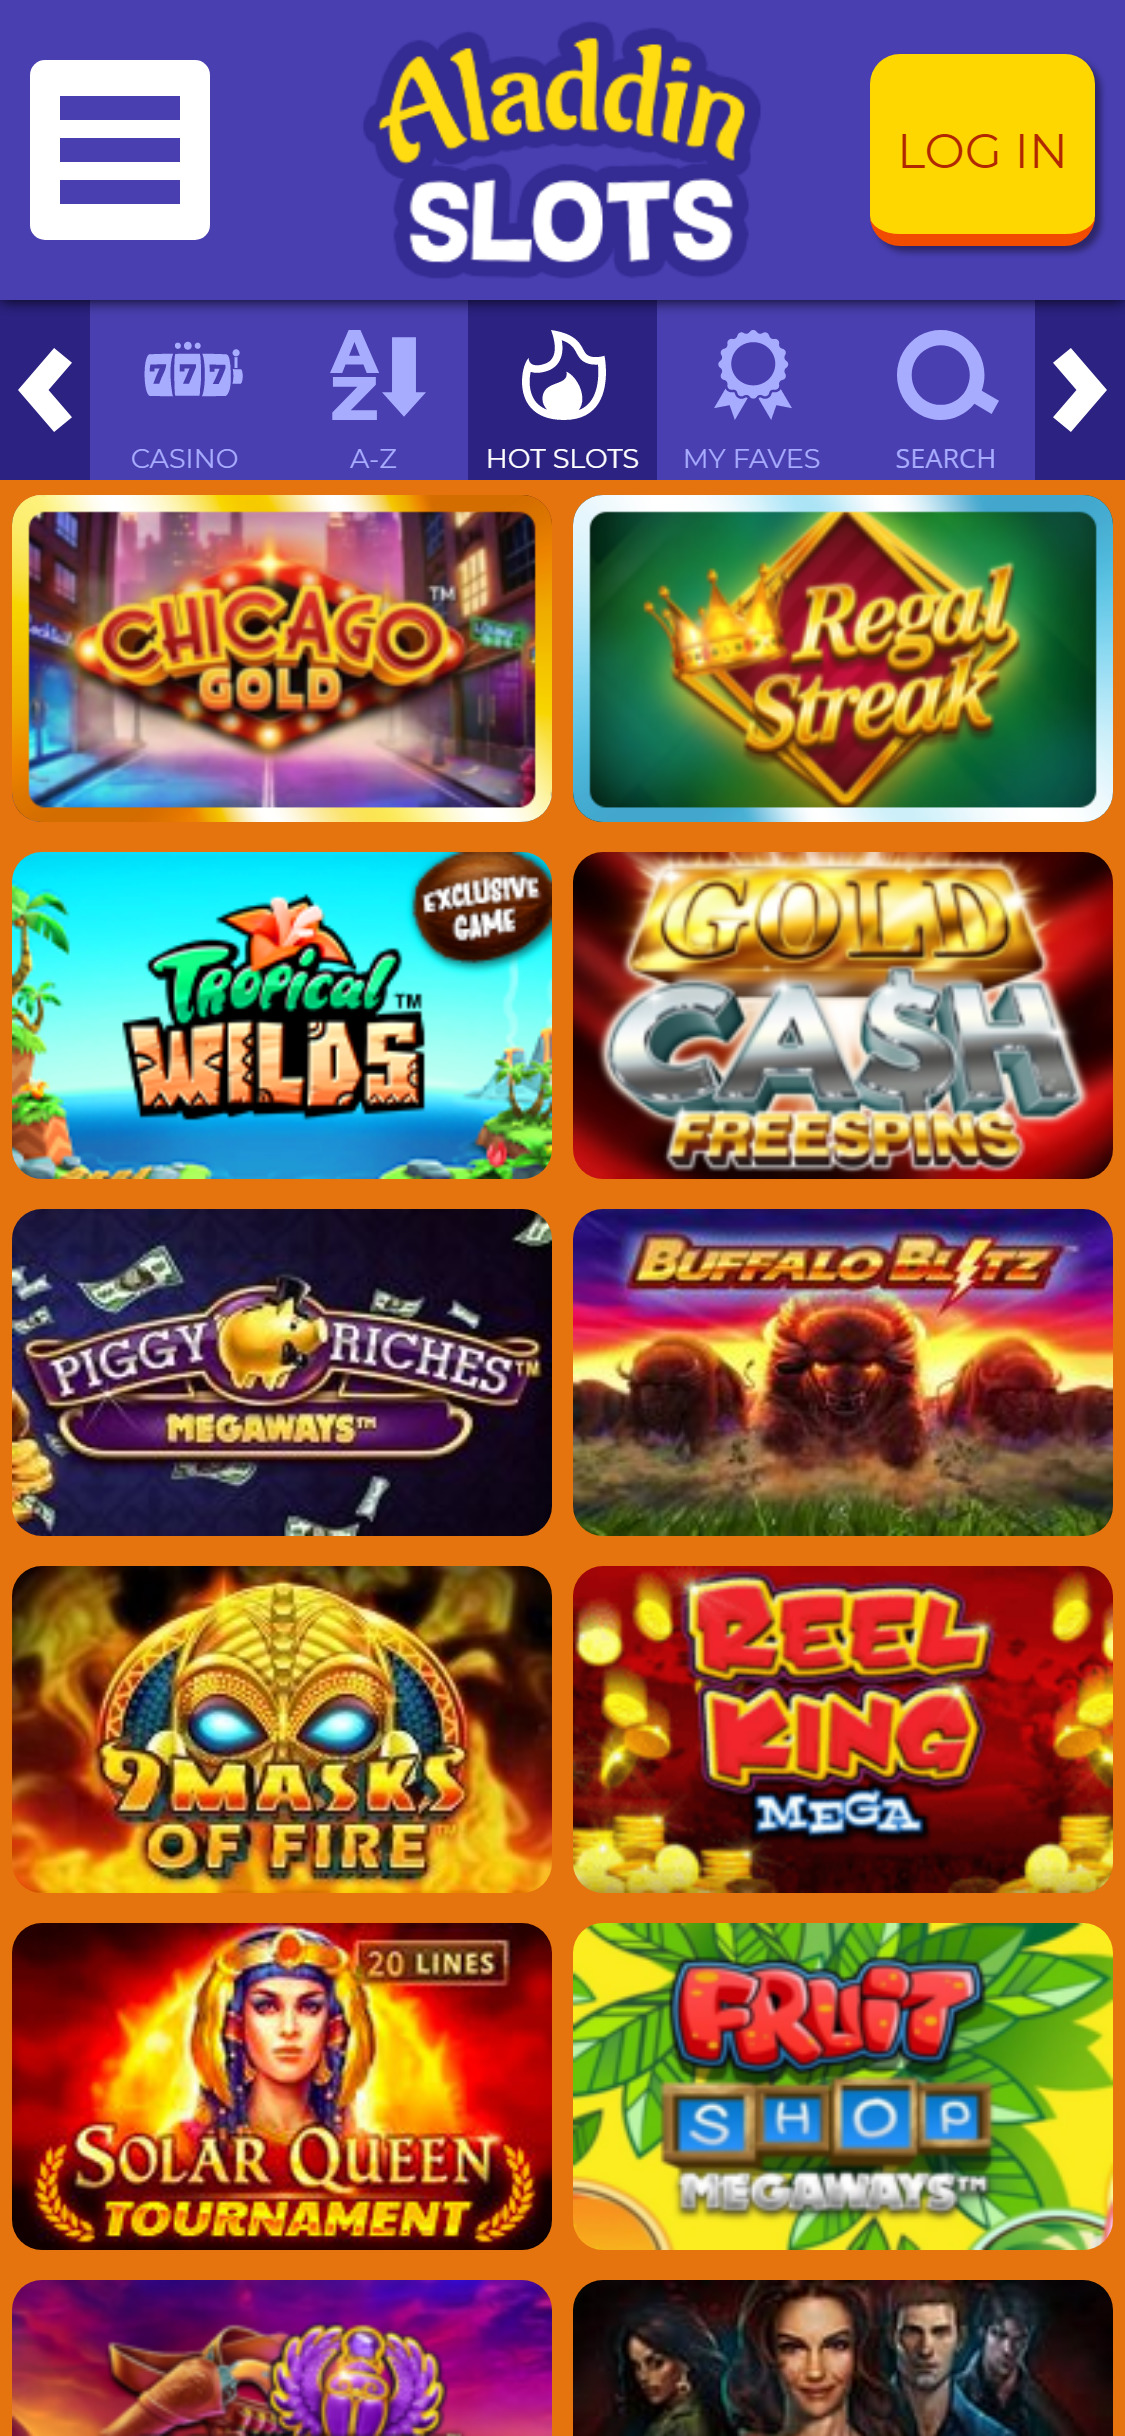 Dragon Slots Casino Mobile Games Review